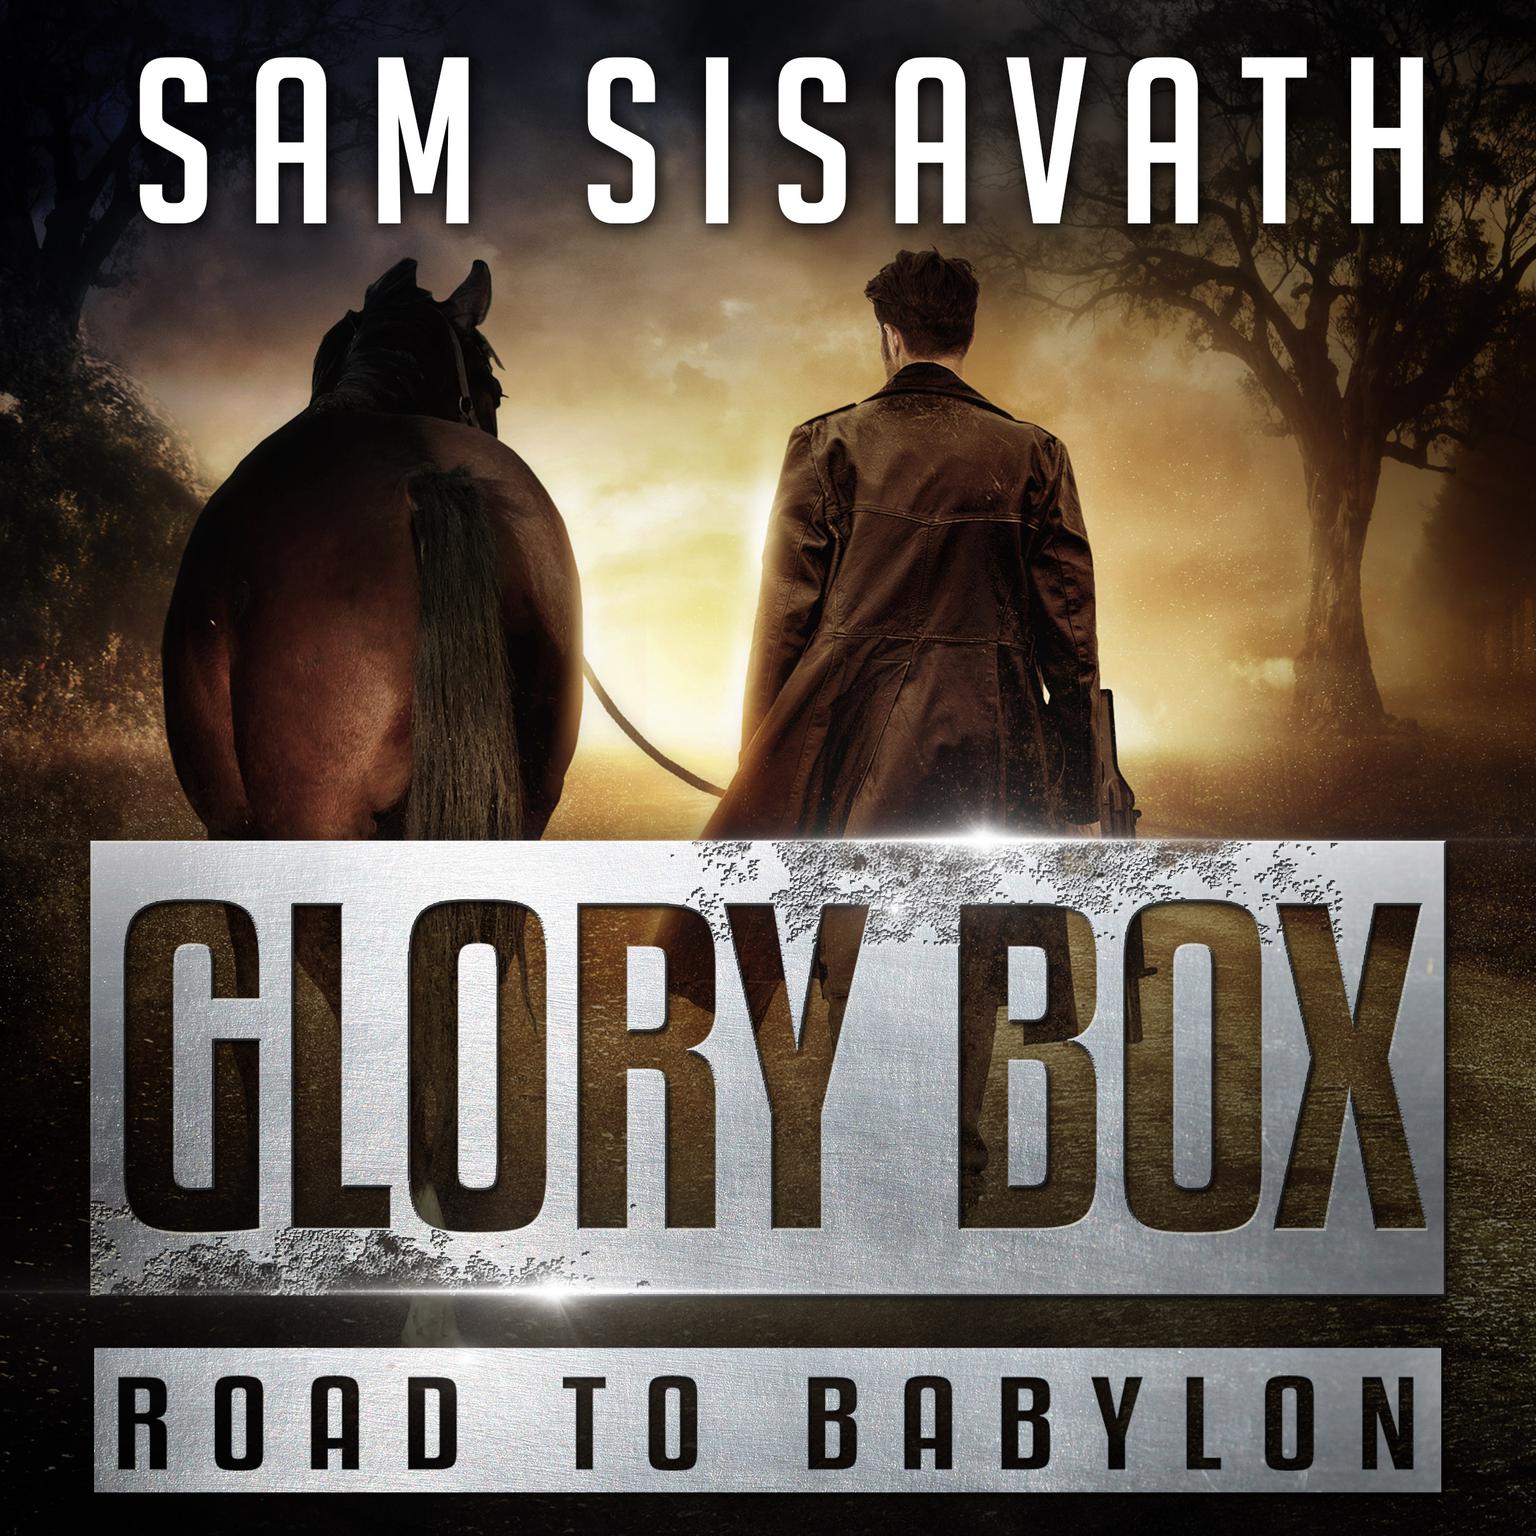 Glory Box Audiobook, by Sam Sisavath